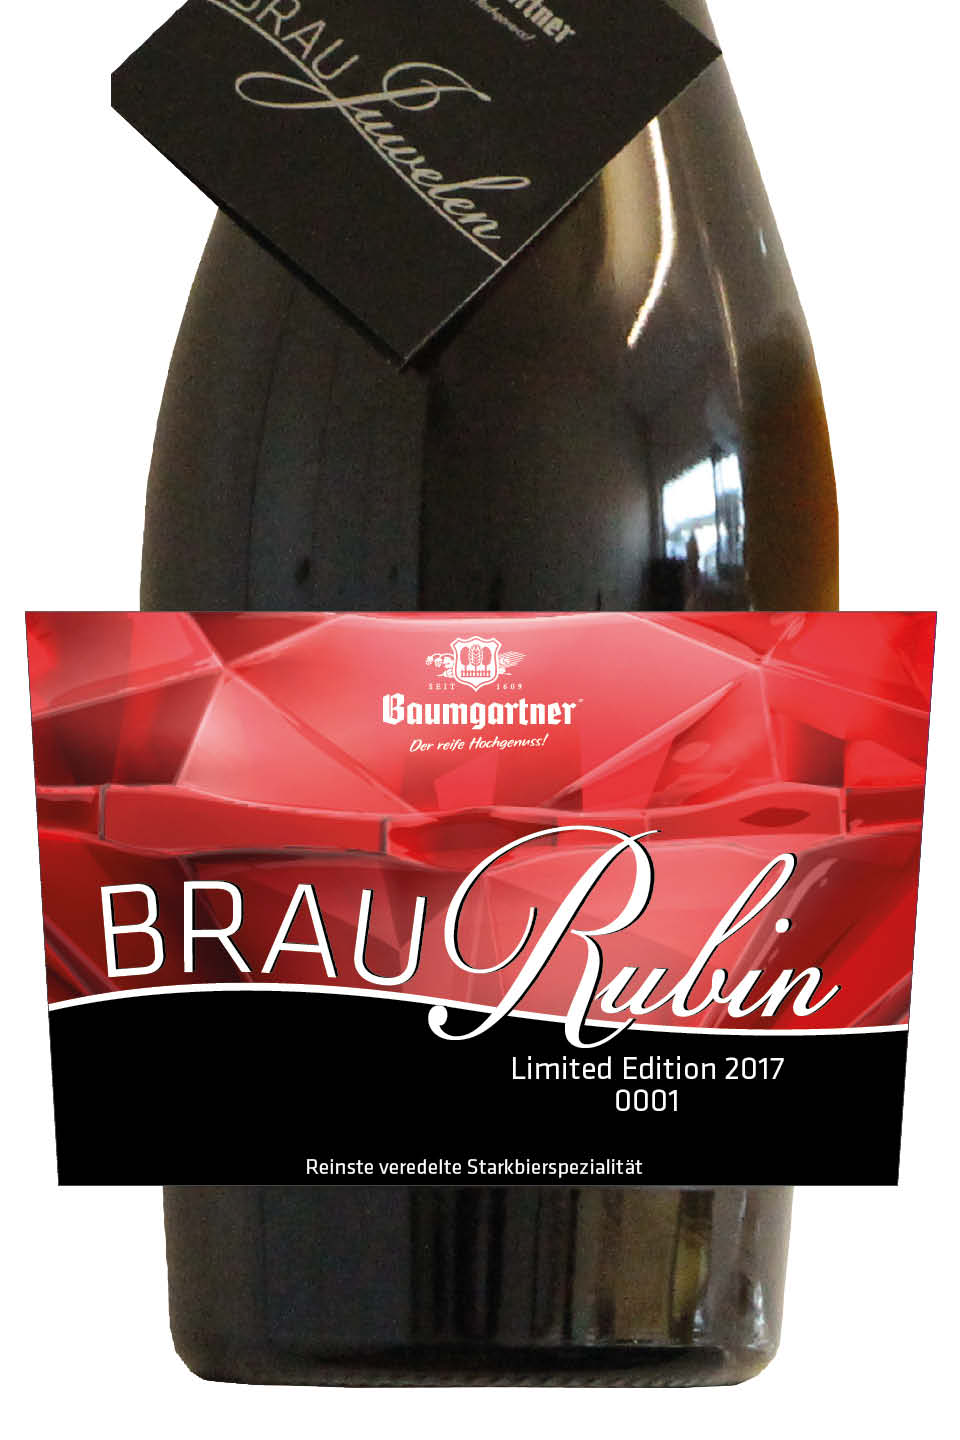 BrauRubin Grafik Verpackung Brauerei Baumgartner